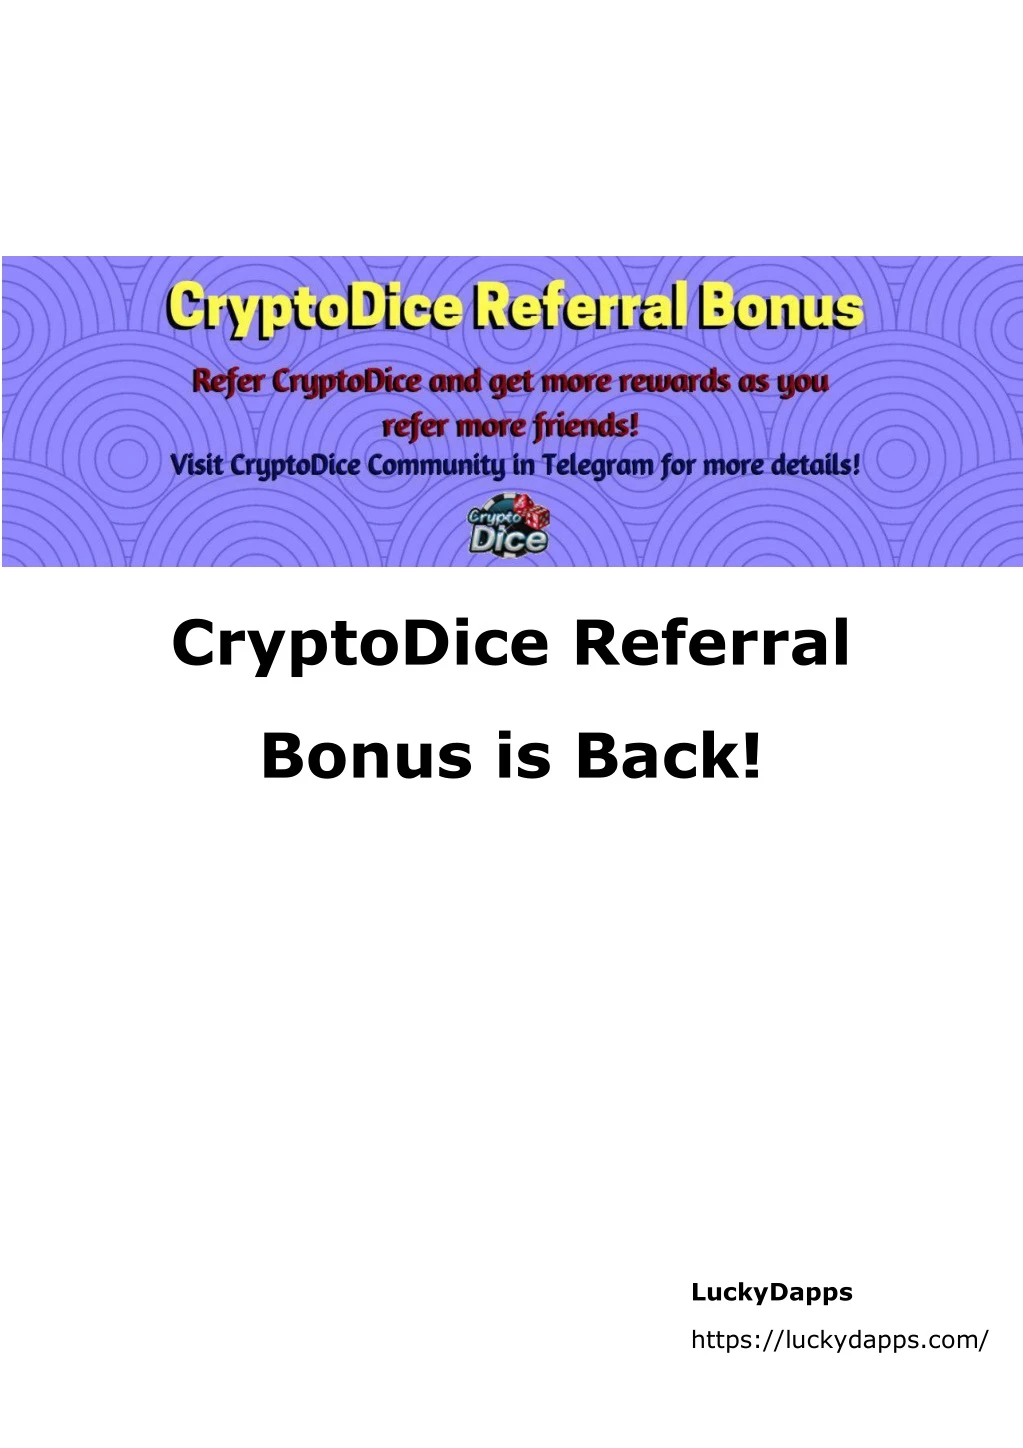 cryptodice referral